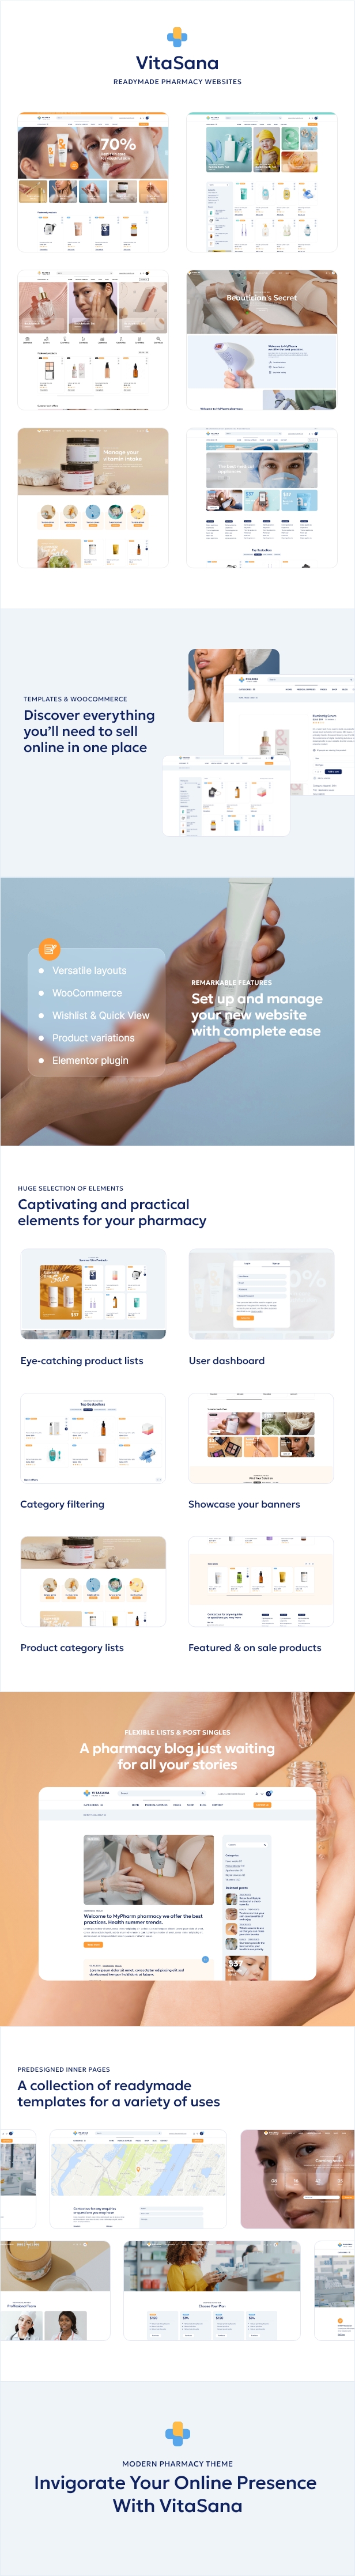 VitaSana - Pharmacy & Medical Store WordPress Theme - 2